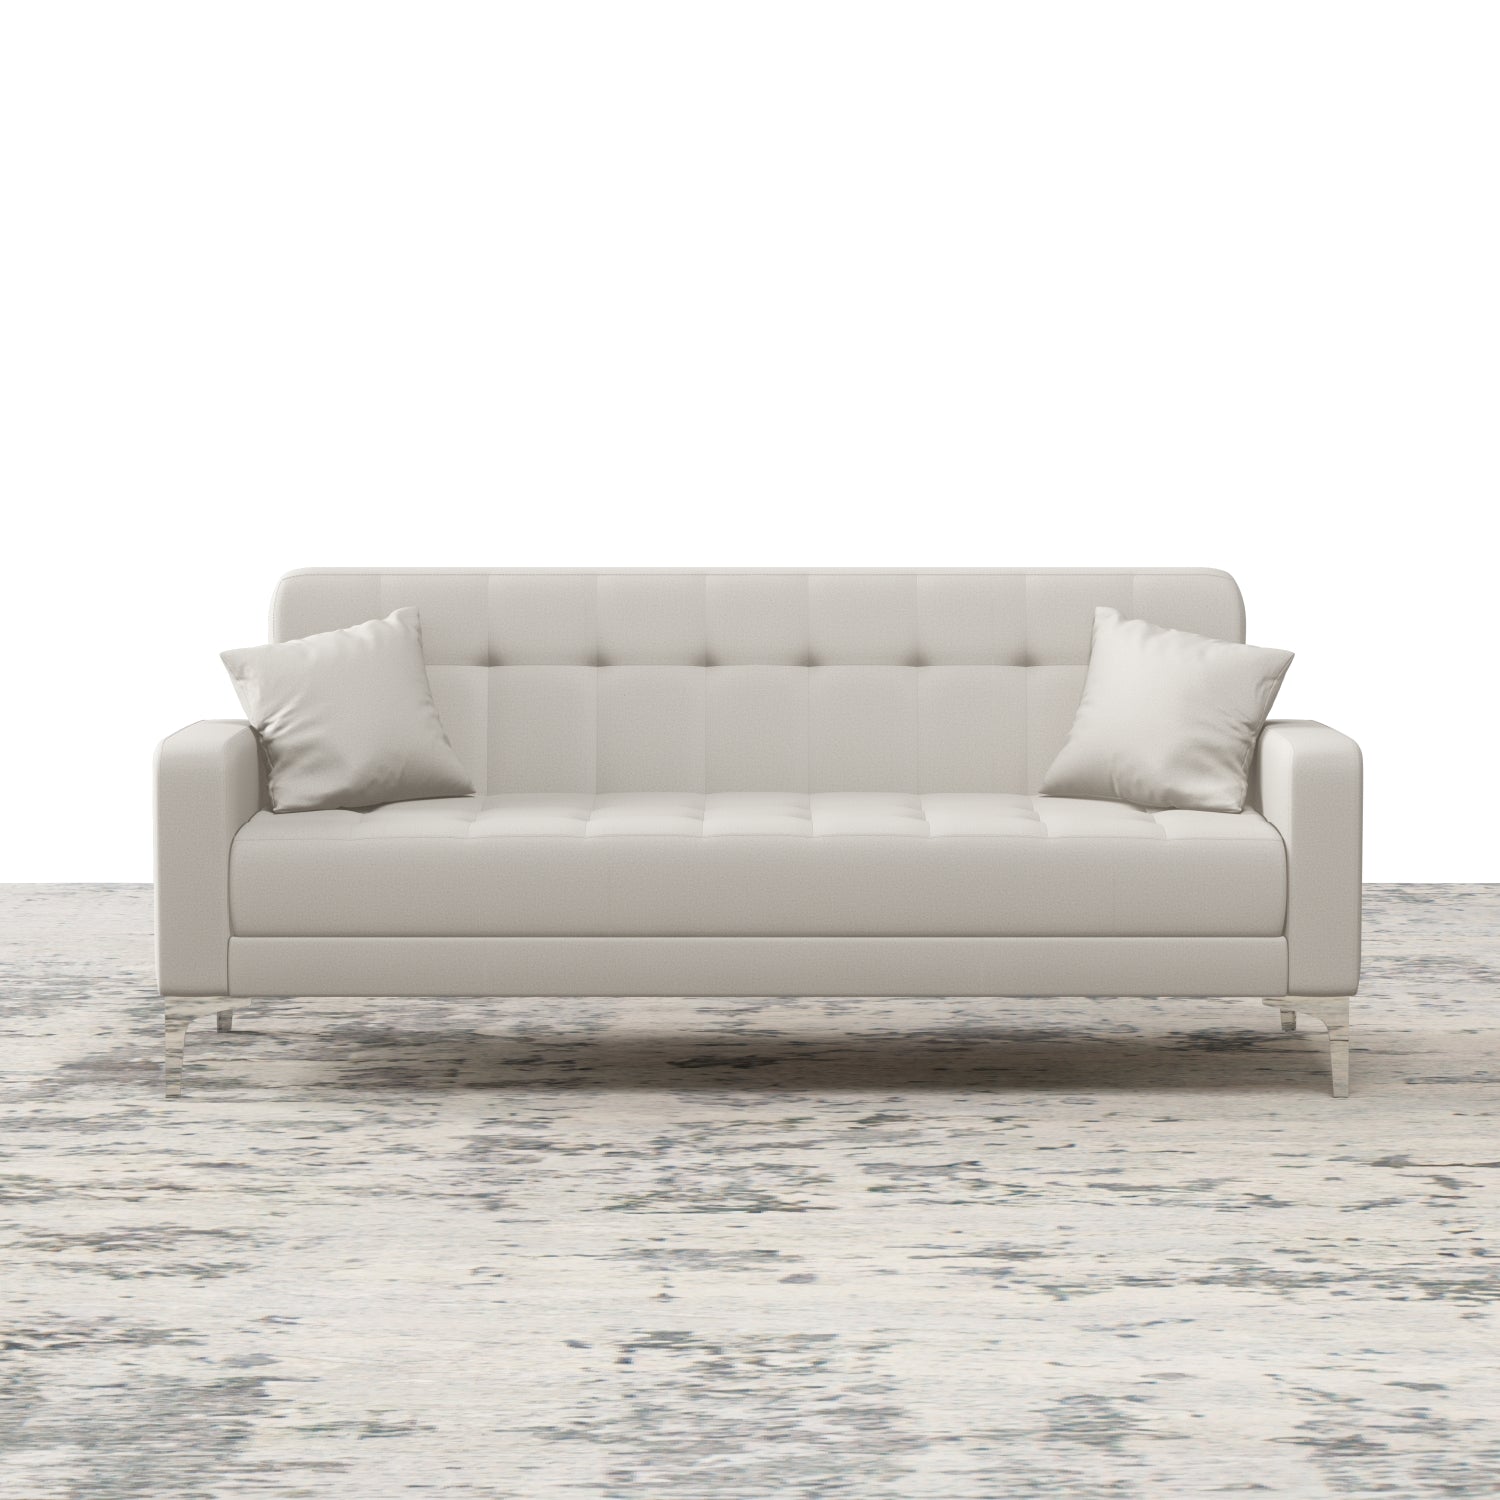 ViscoLogic Bella Forward Fashion Mid-Century Tufted Style Fabric Upholstered Modern Living Room Sofa (Beige)